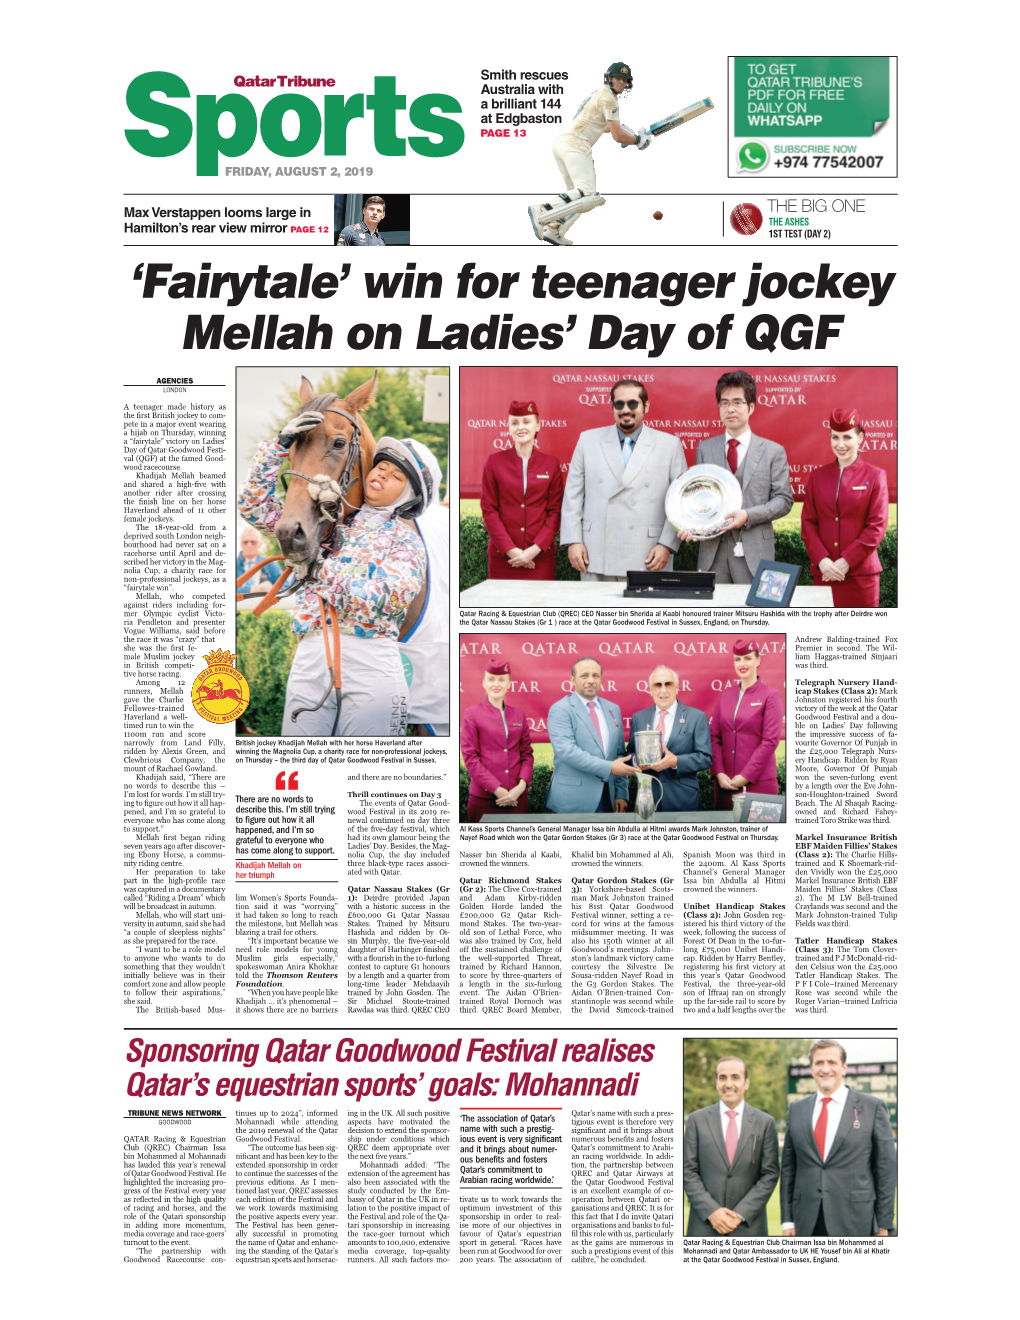 Win for Teenager Jockey Mellah on Ladies' Day Of